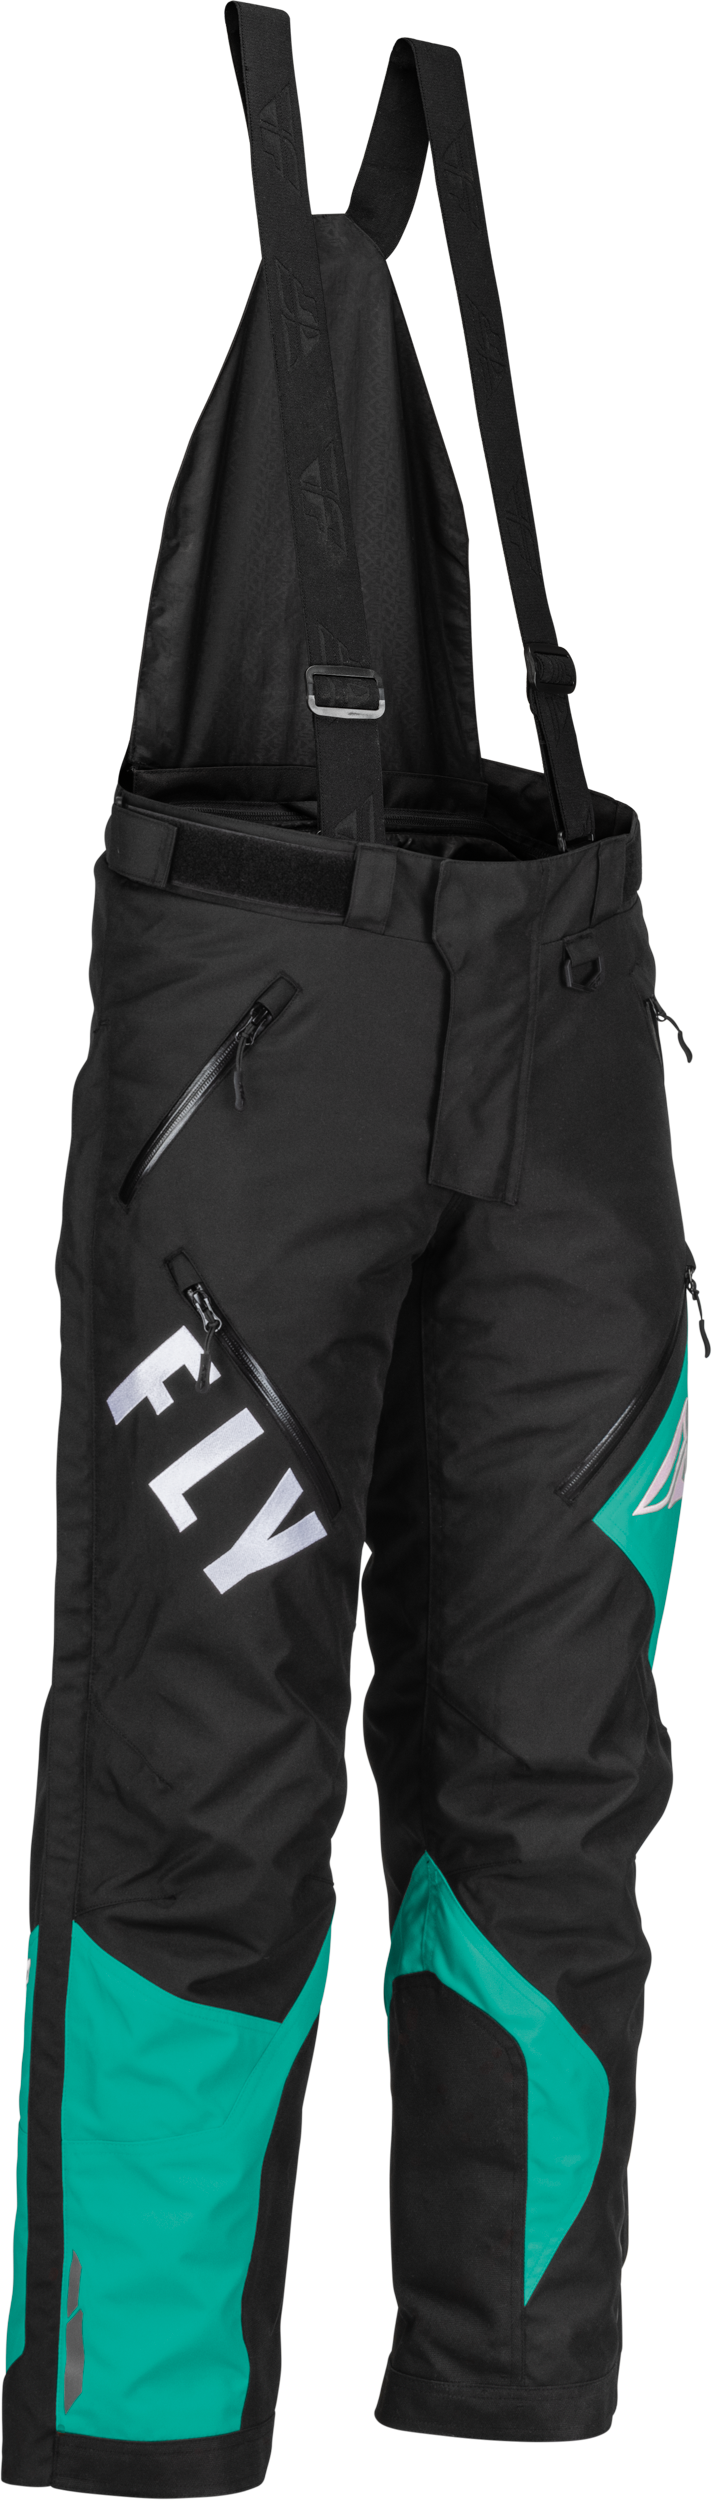 FLY RACING Women's Snx Pro Pants Black/Mint Md 470-4515M